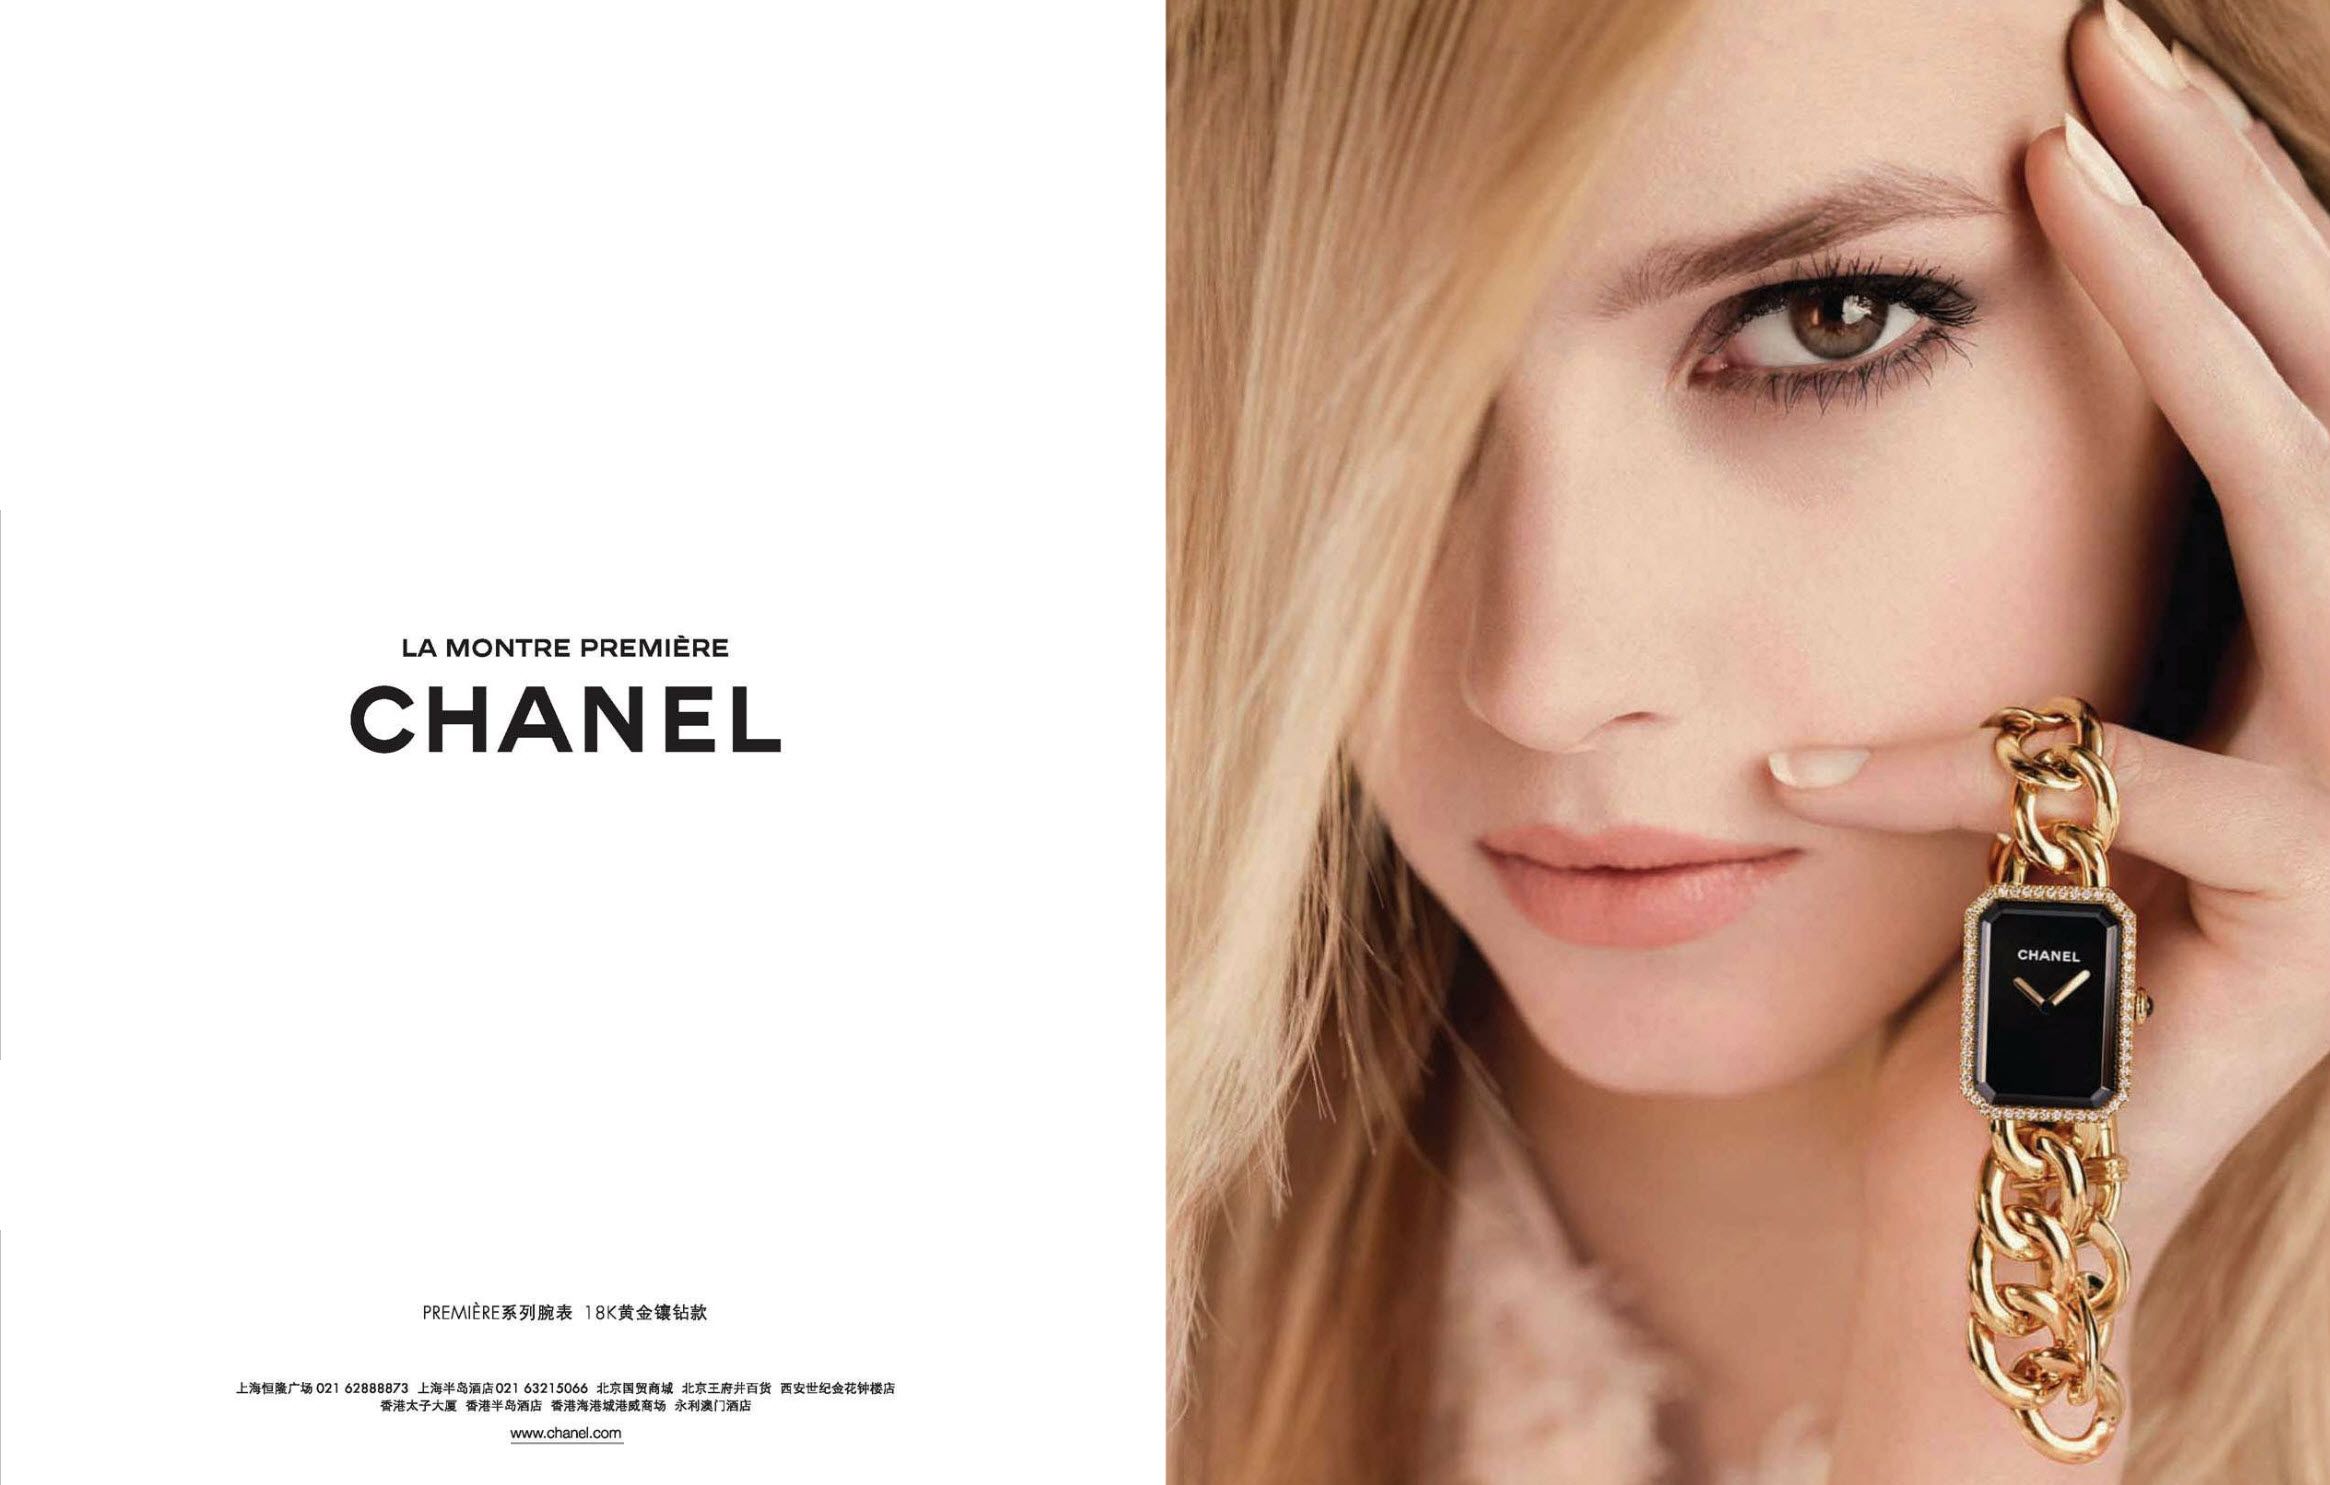 Chanel 'La Montre Première' SS 2013